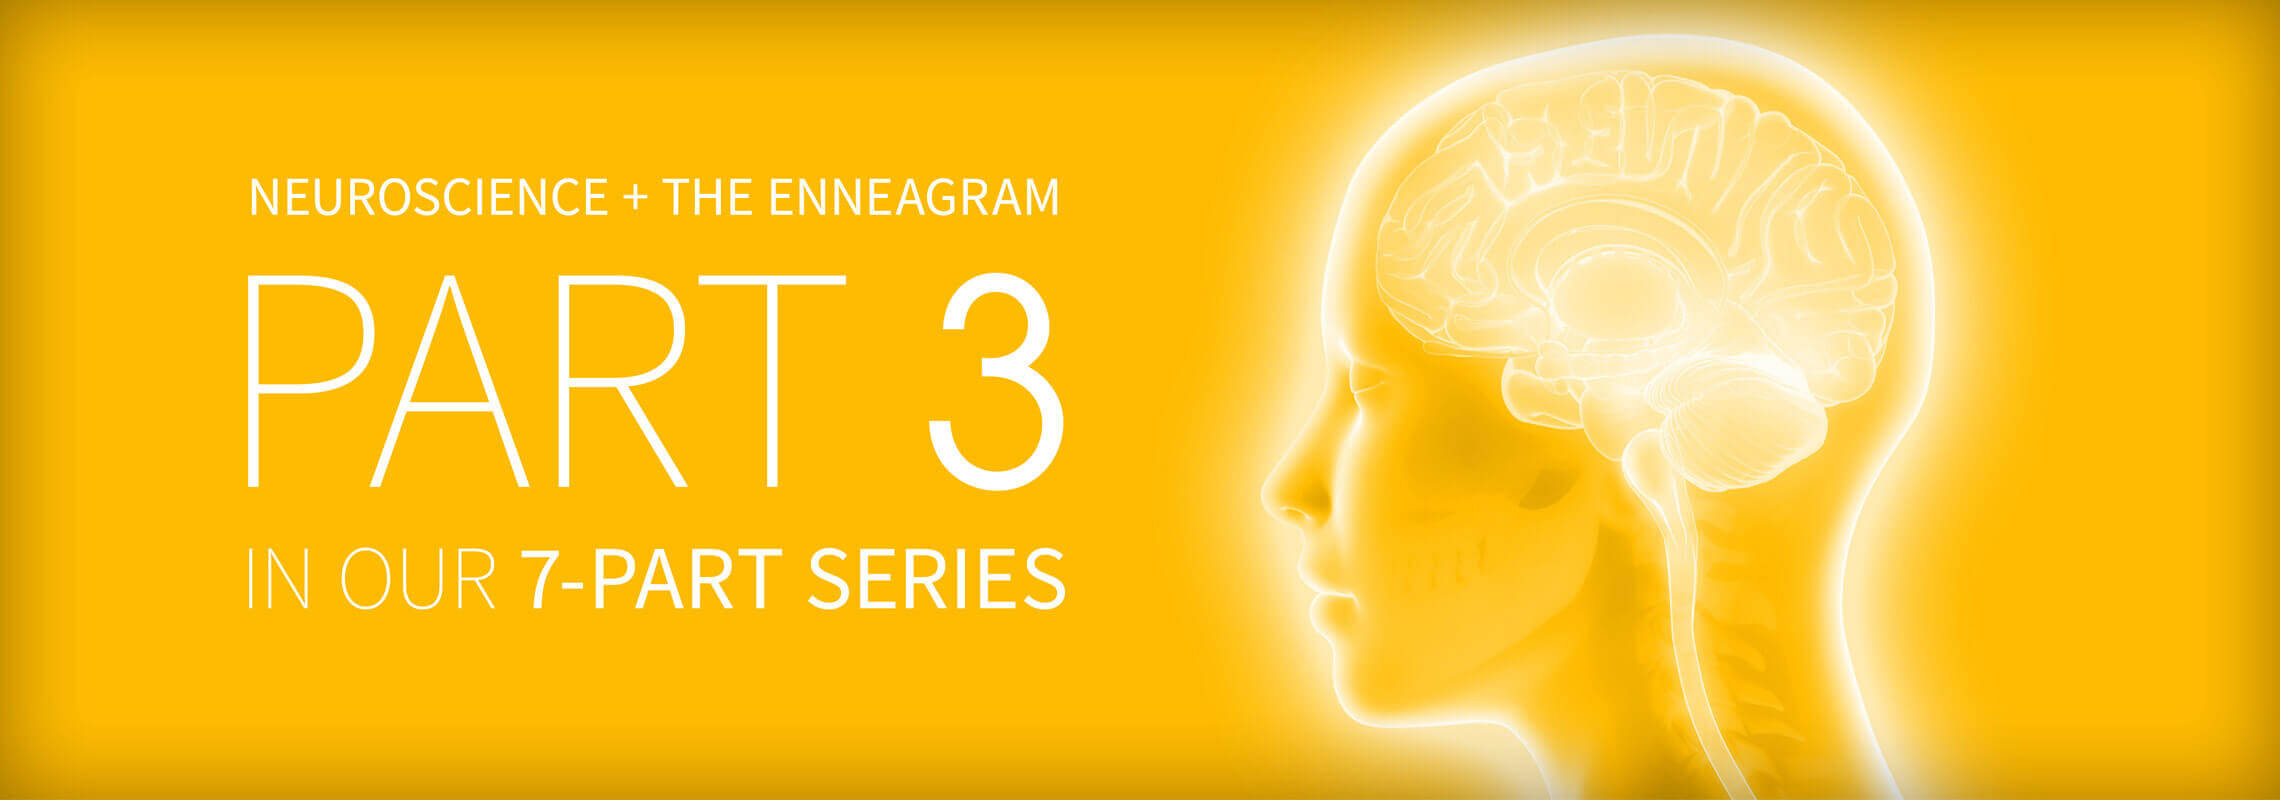 neuroscience and enneagram part 3